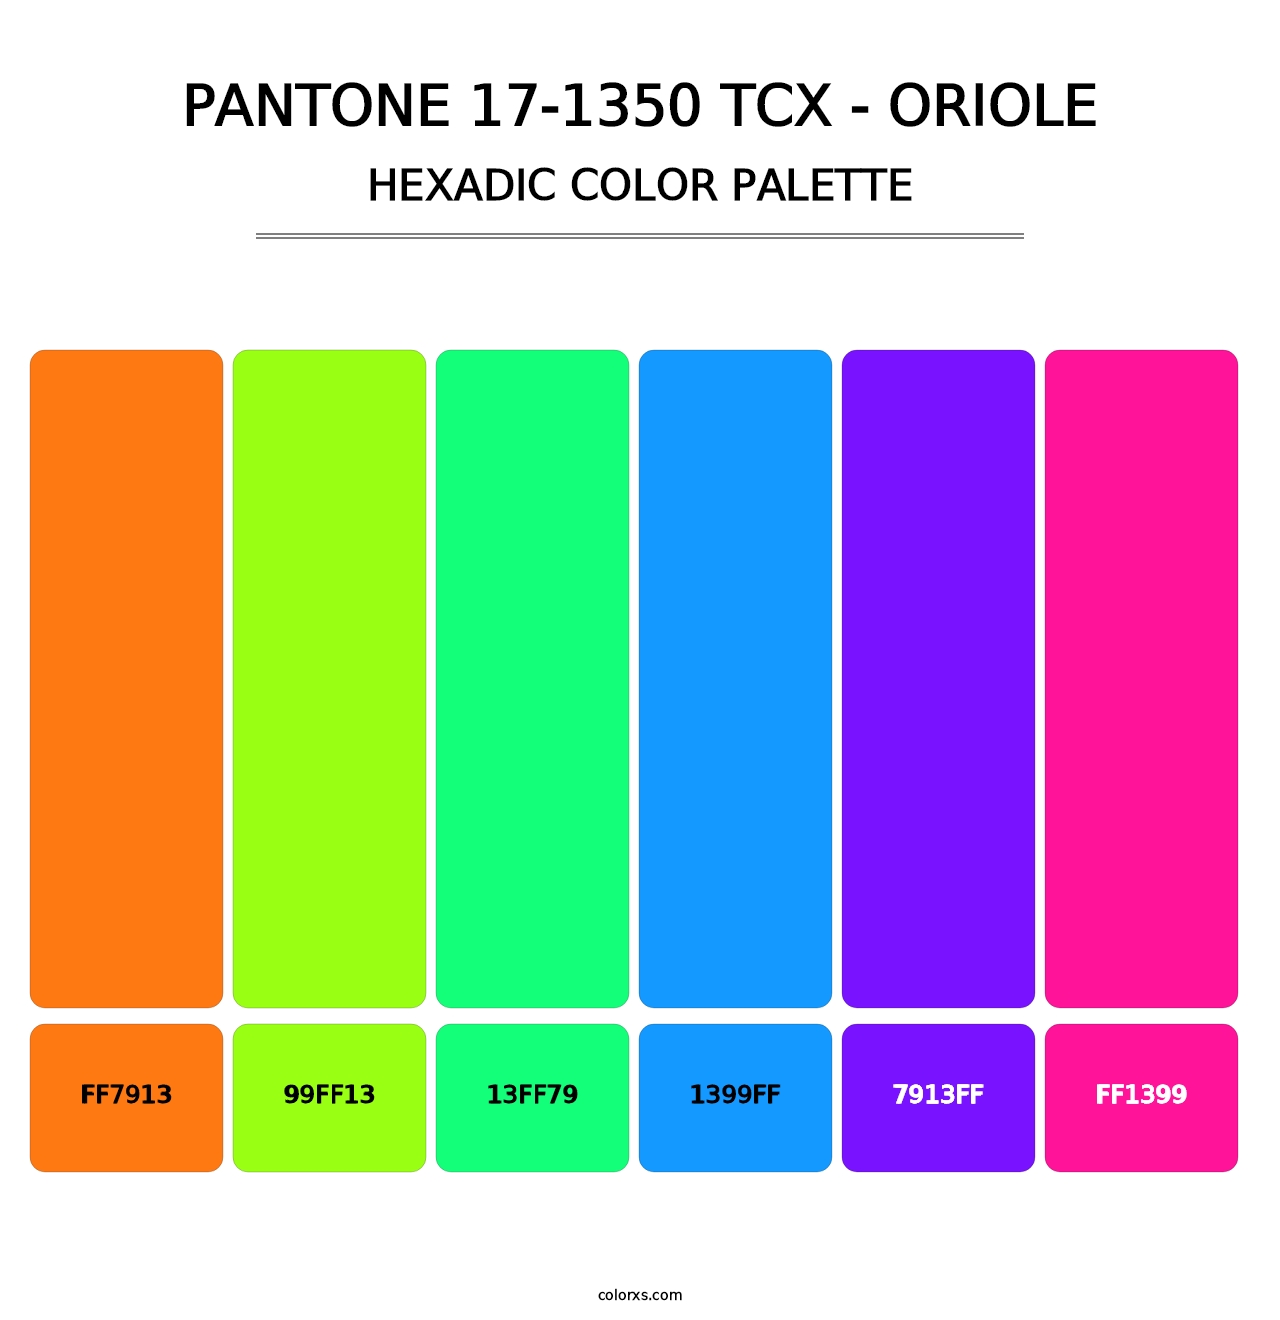 PANTONE 17-1350 TCX - Oriole - Hexadic Color Palette